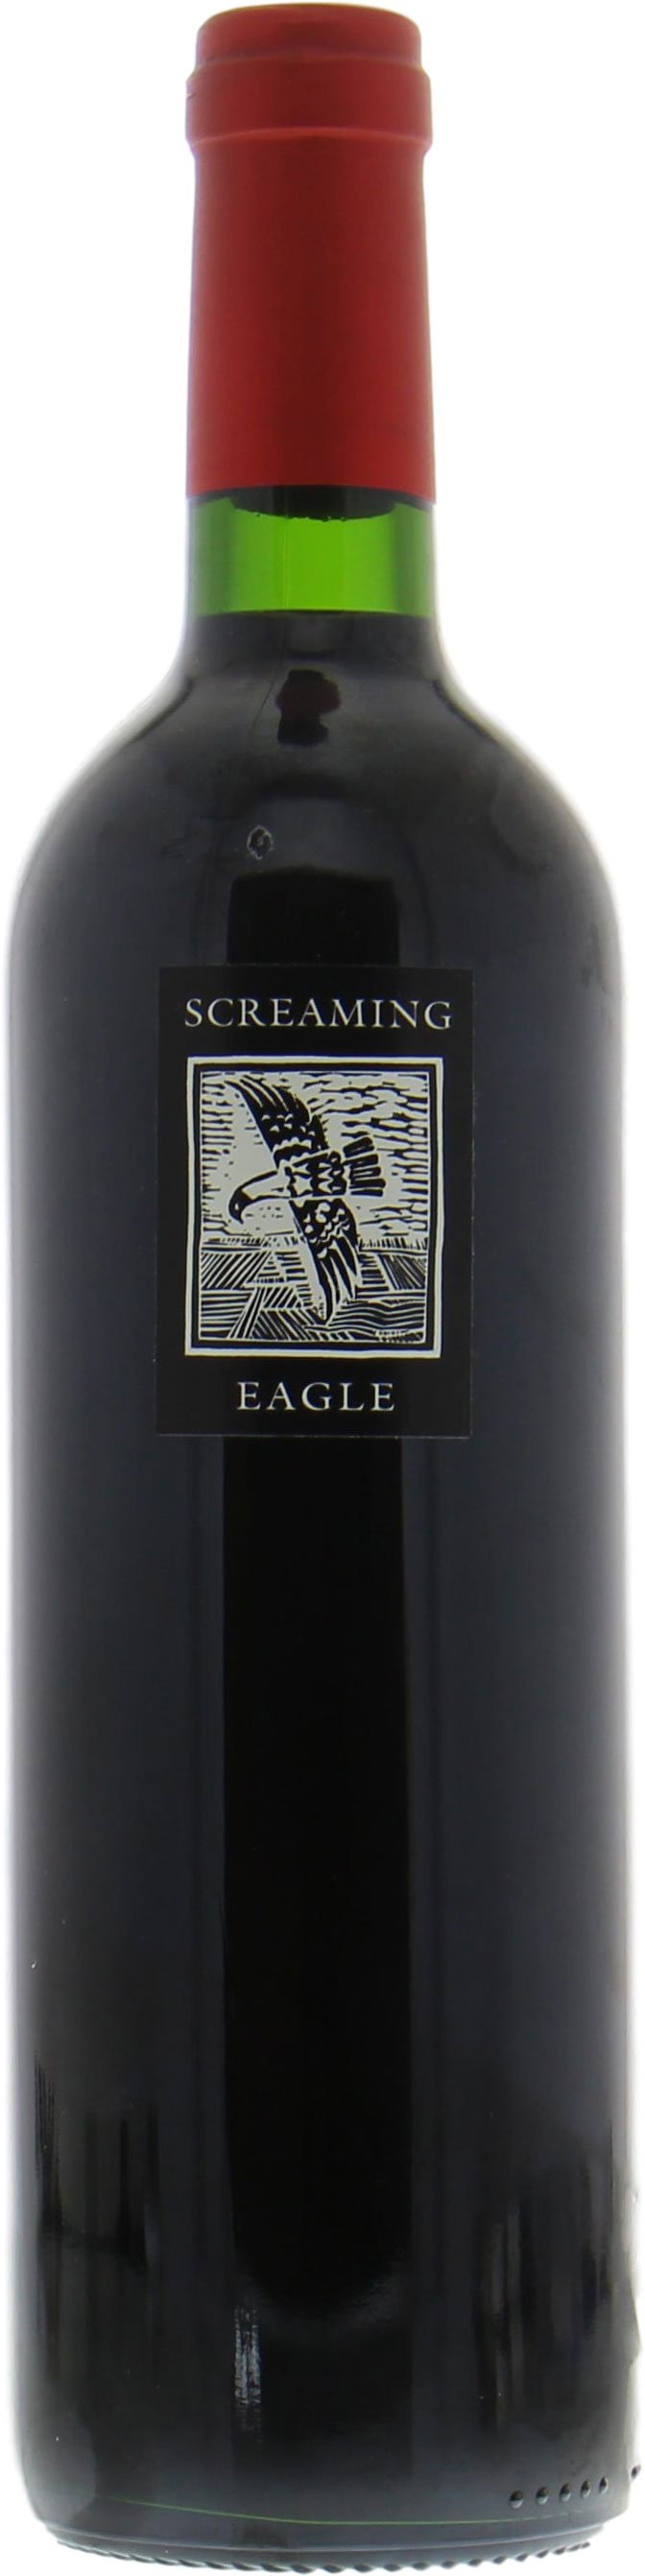 Screaming Eagle - Cabernet Sauvignon 2008 Perfect